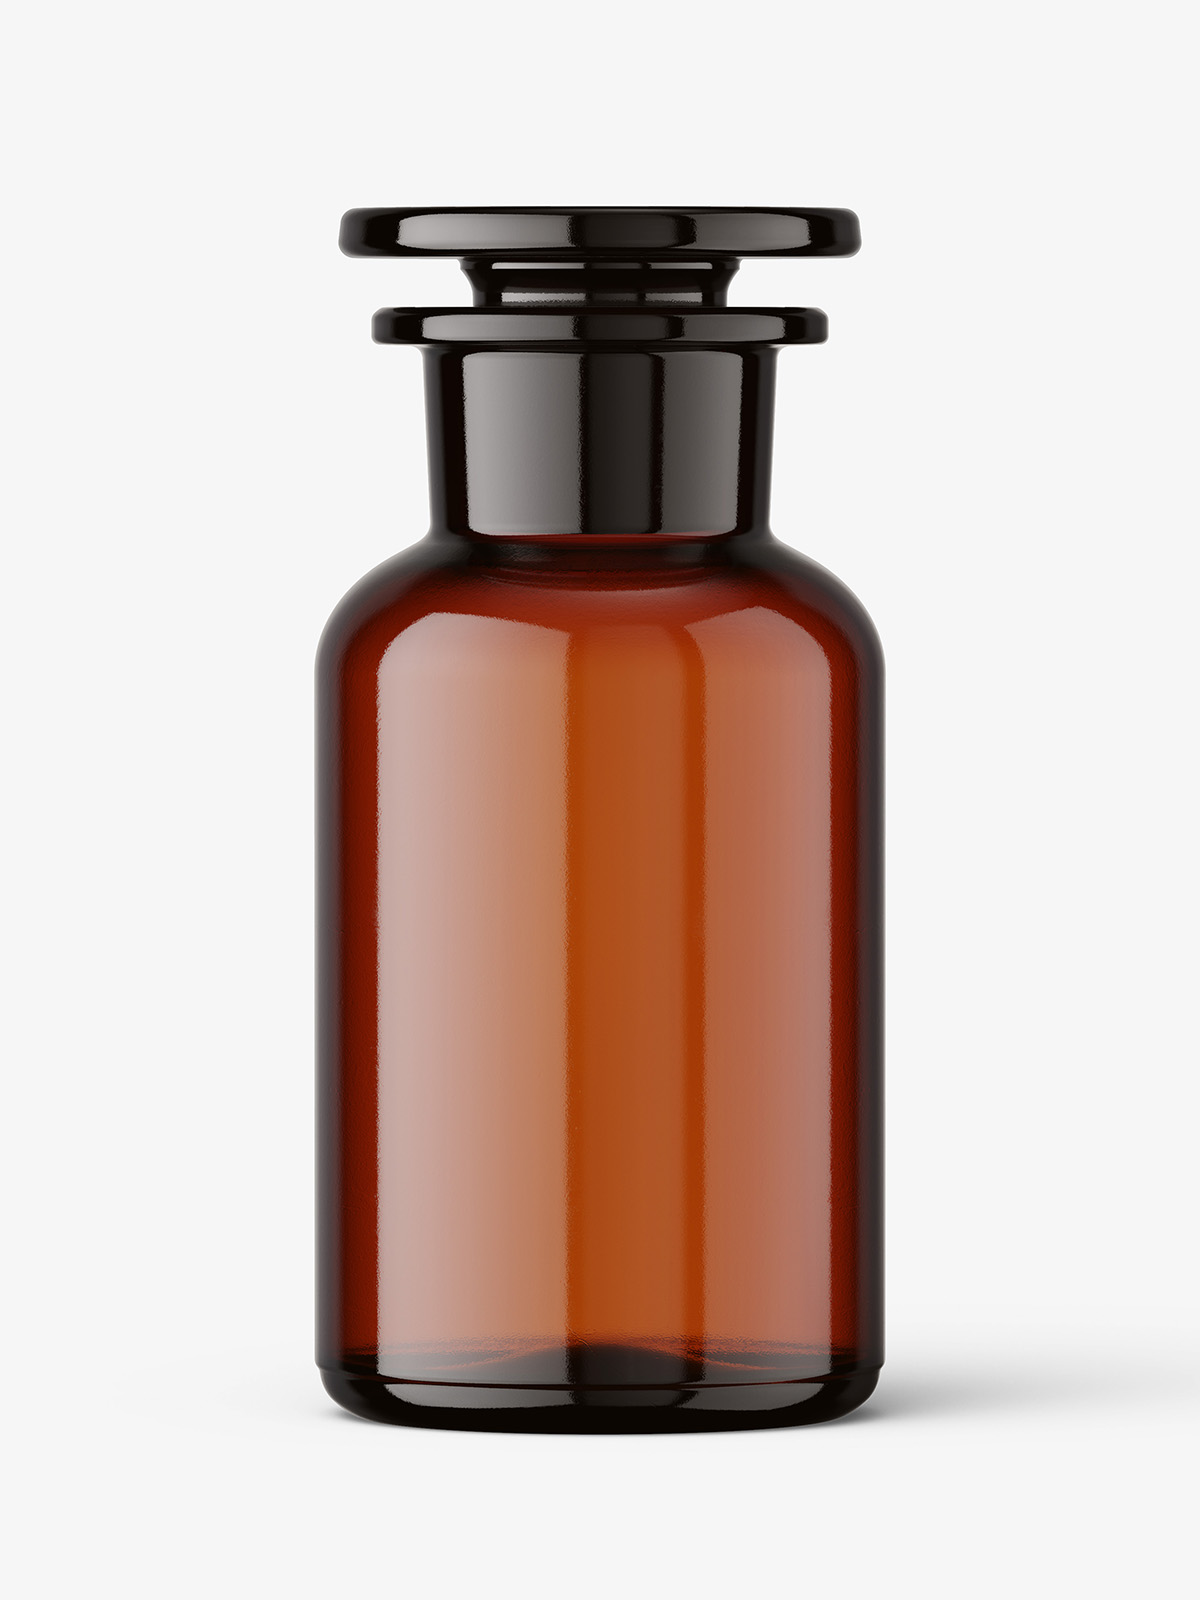 Download Amber Apothecary Bottle Mockup 250 Ml Smarty Mockups